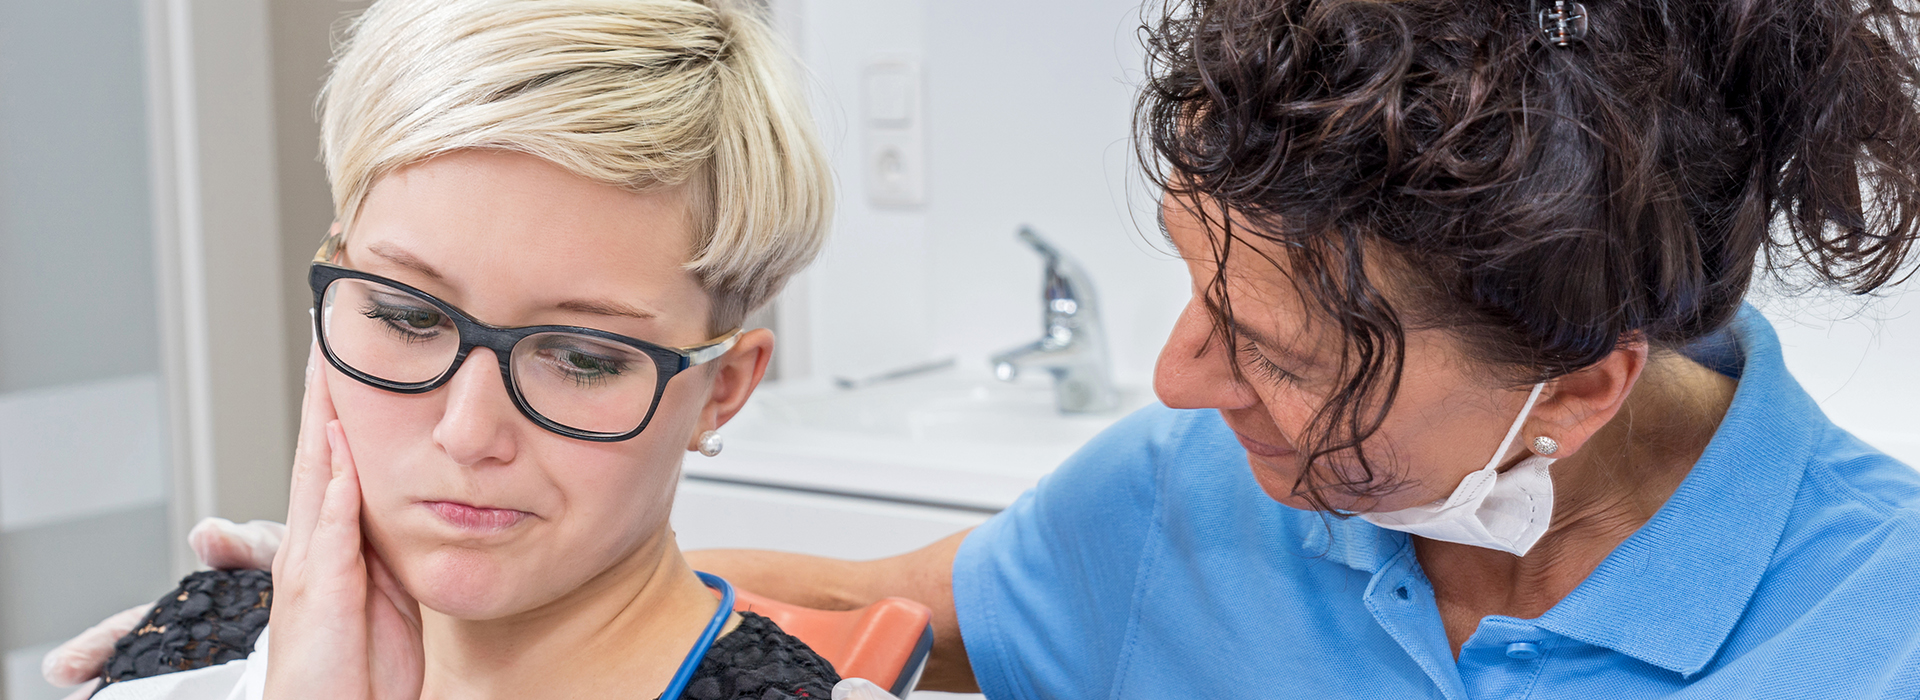 Modern Dental Care of Queens | Dental Bridges, Implant Restorations and Oral Cancer Screening